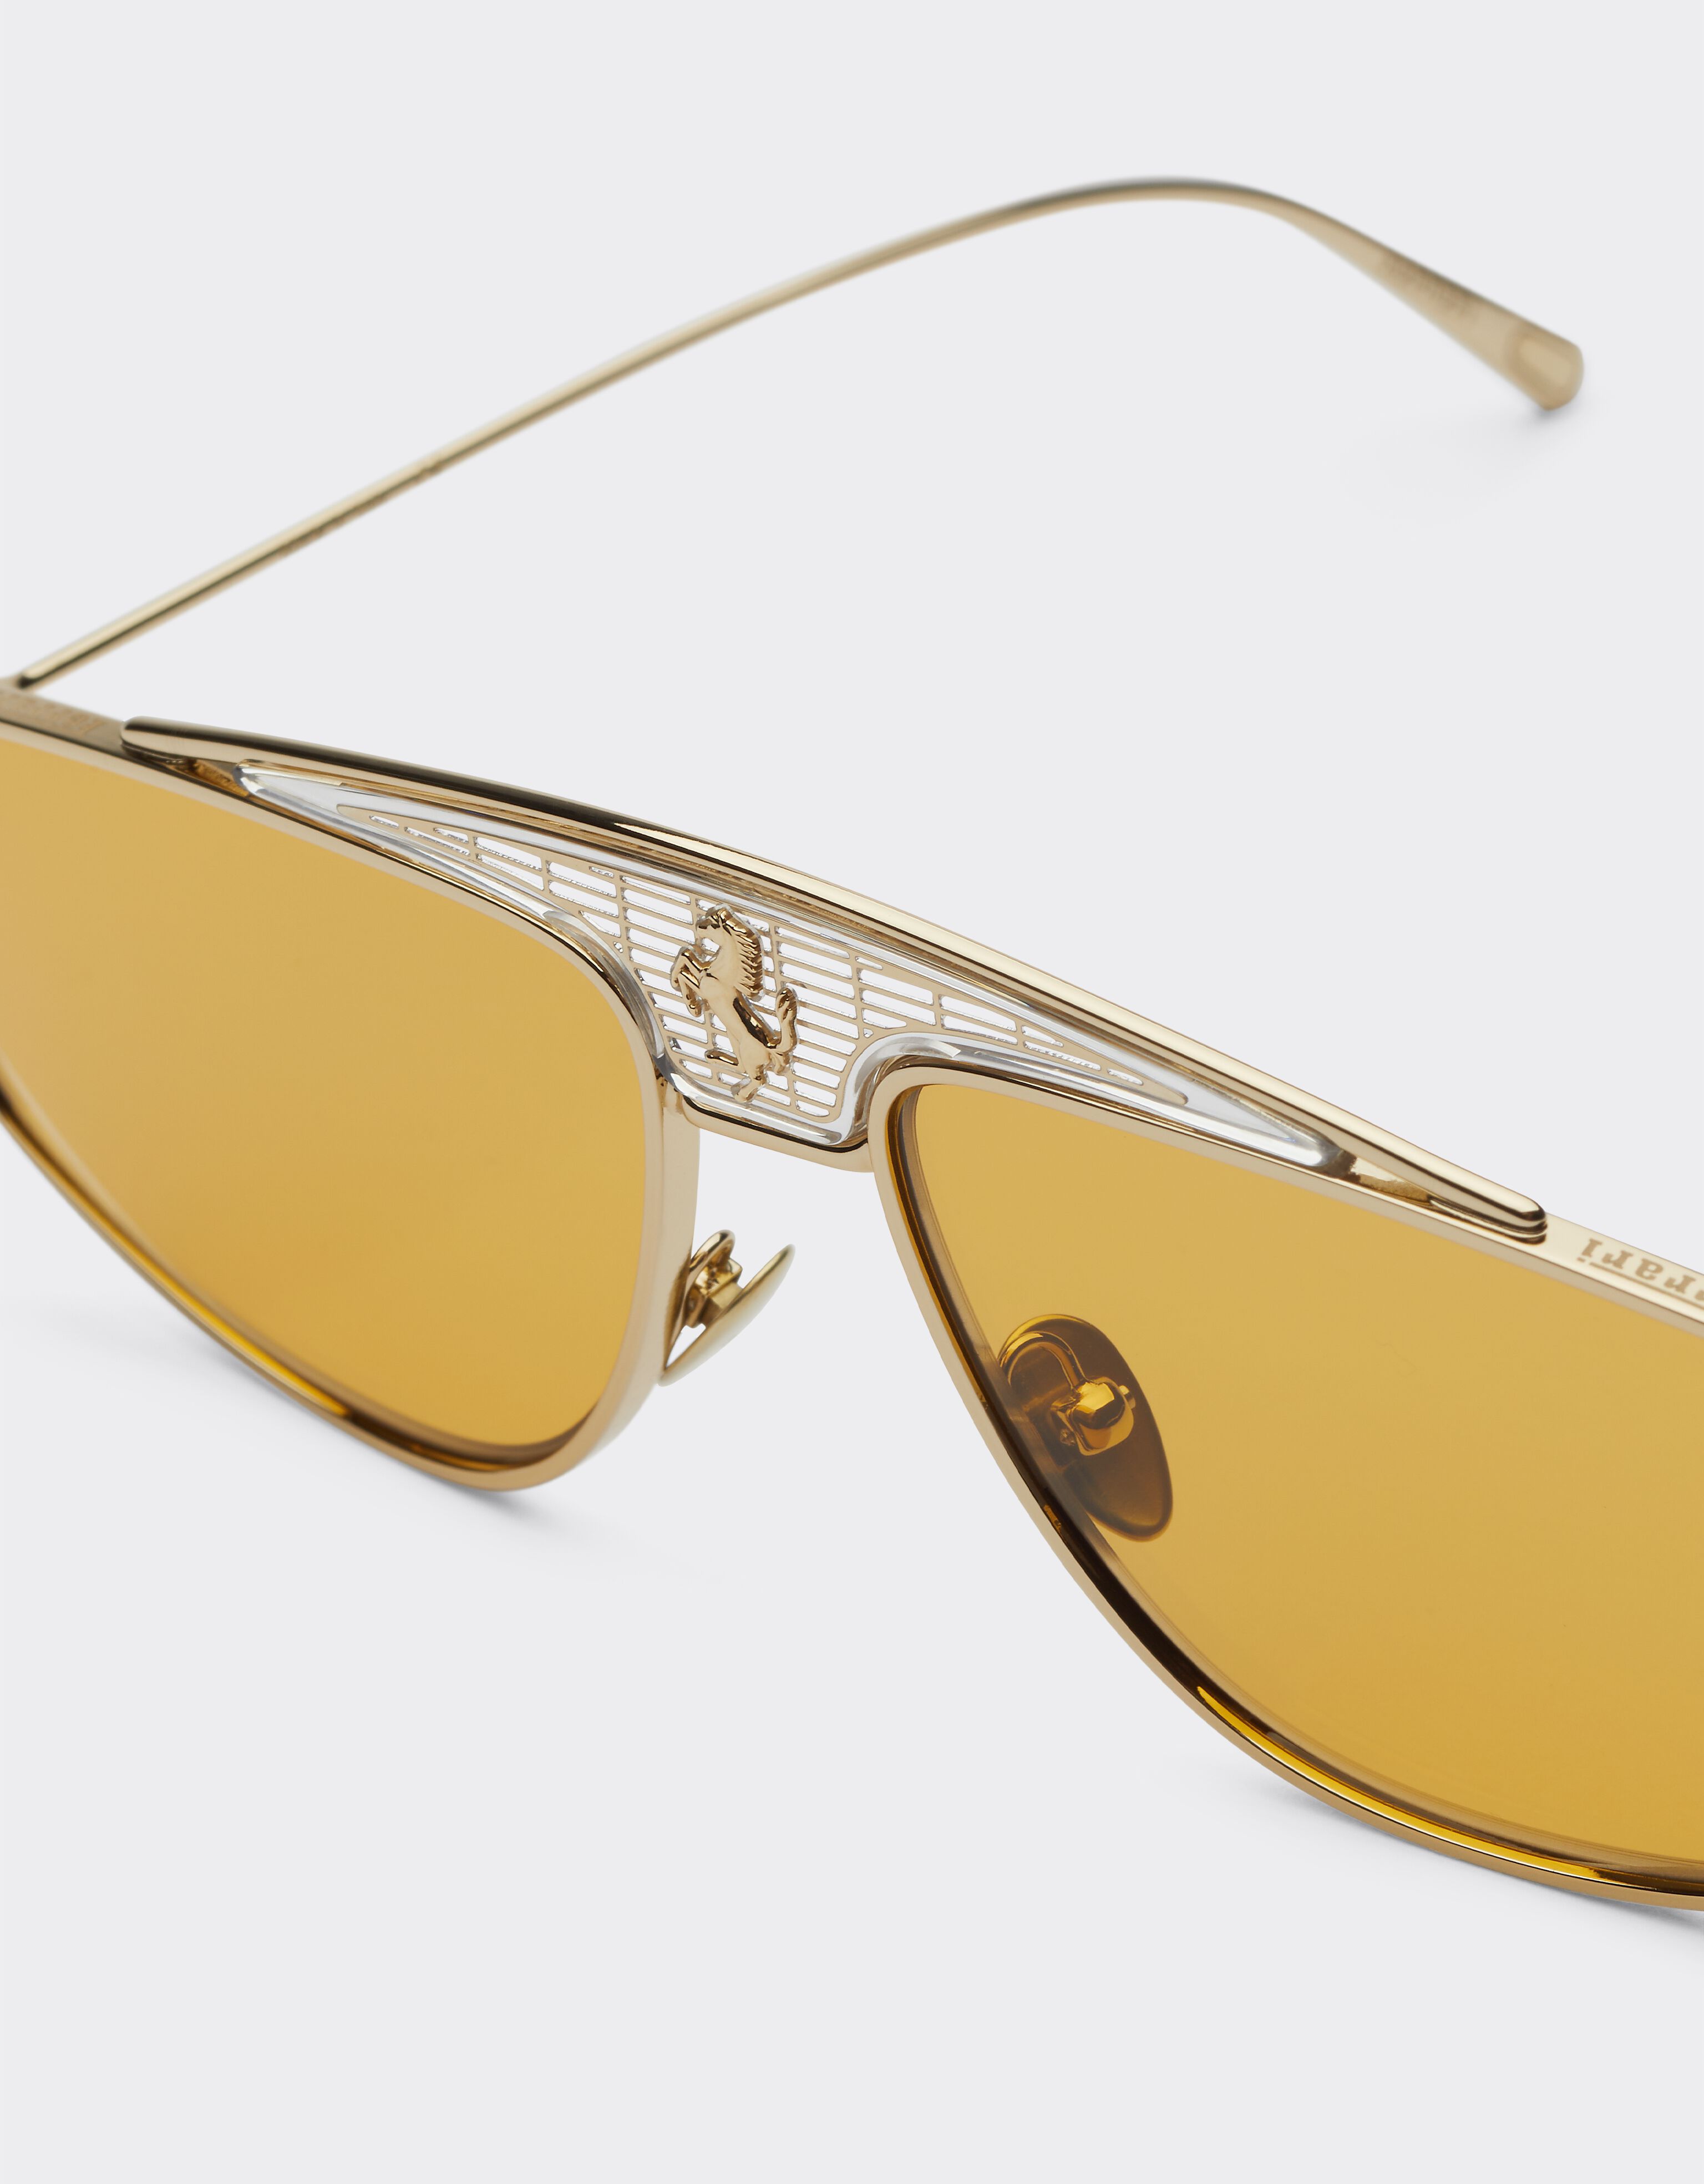 Ferrari Ferrari sunglasses with yellow lenses Gold F0411f